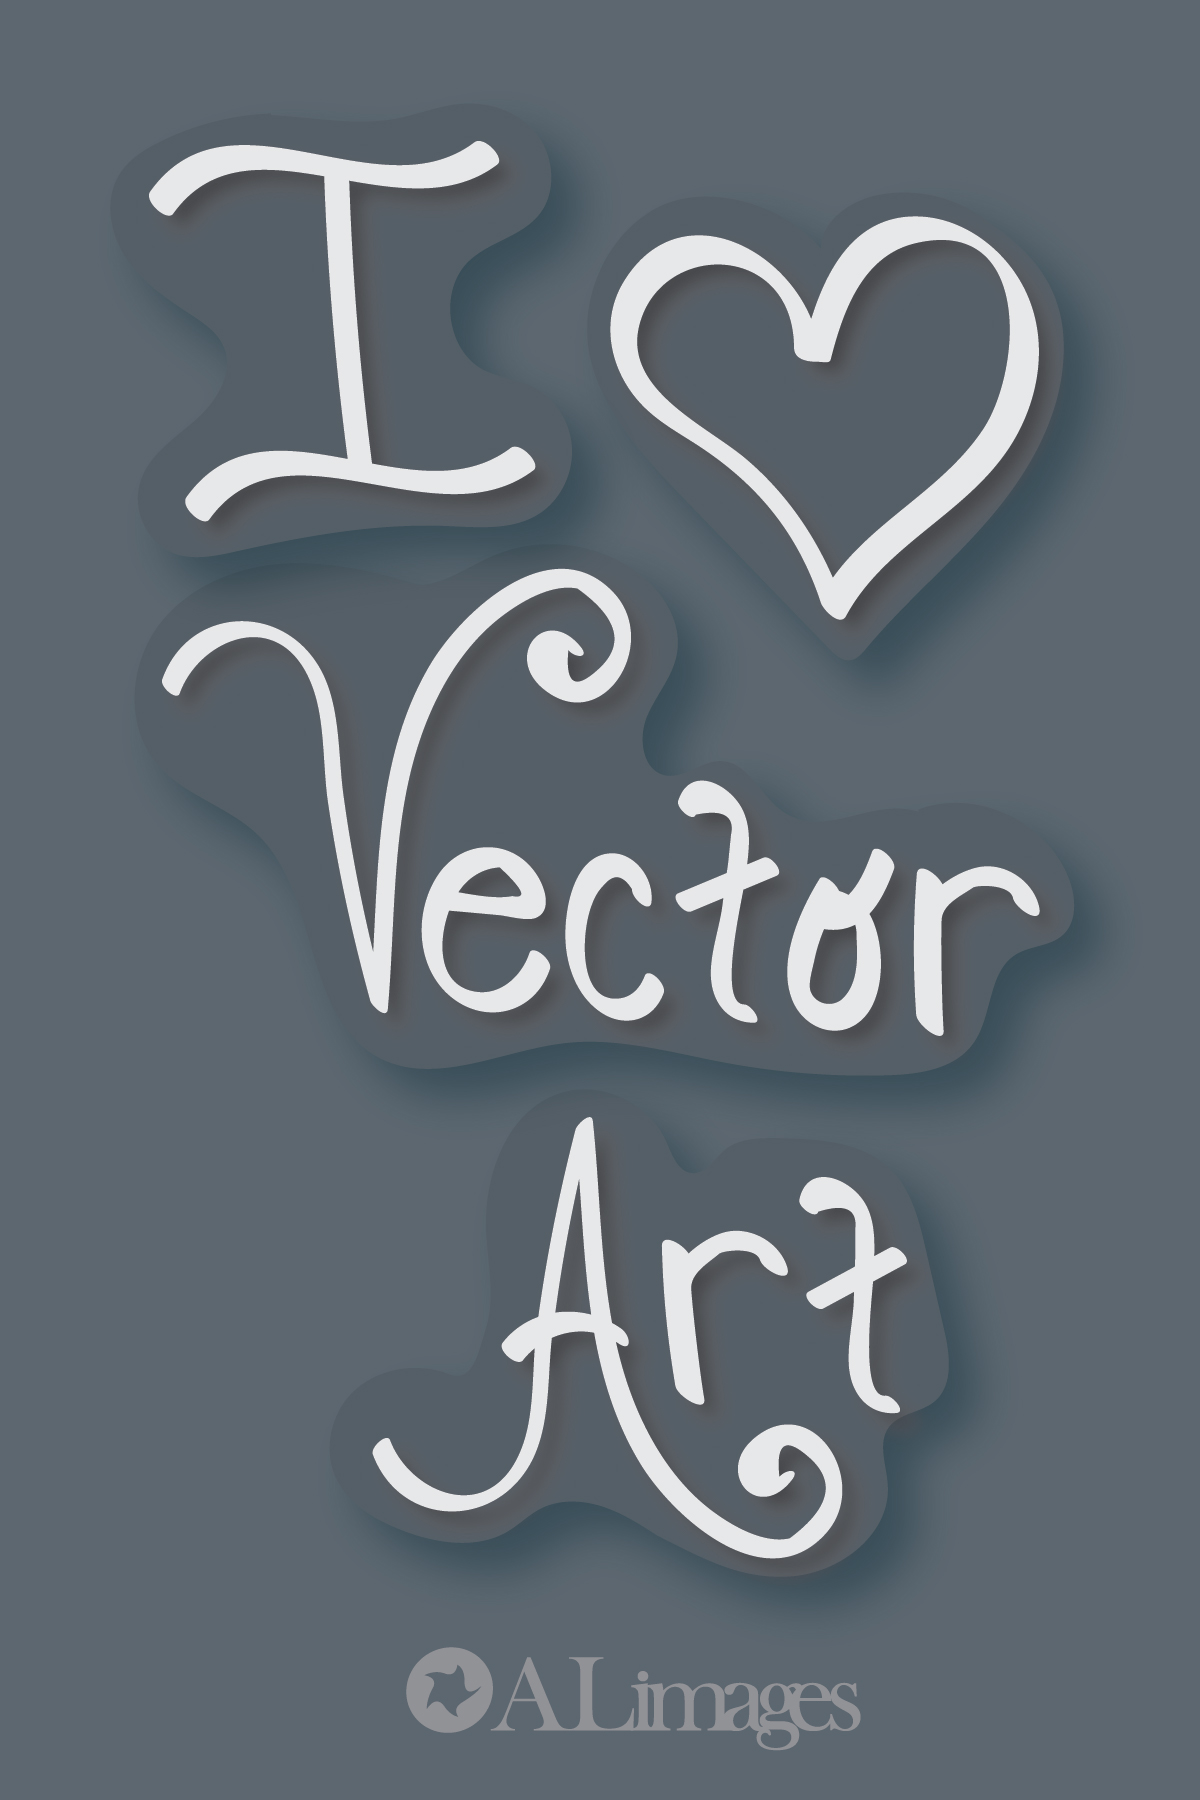 I_love_vector_art